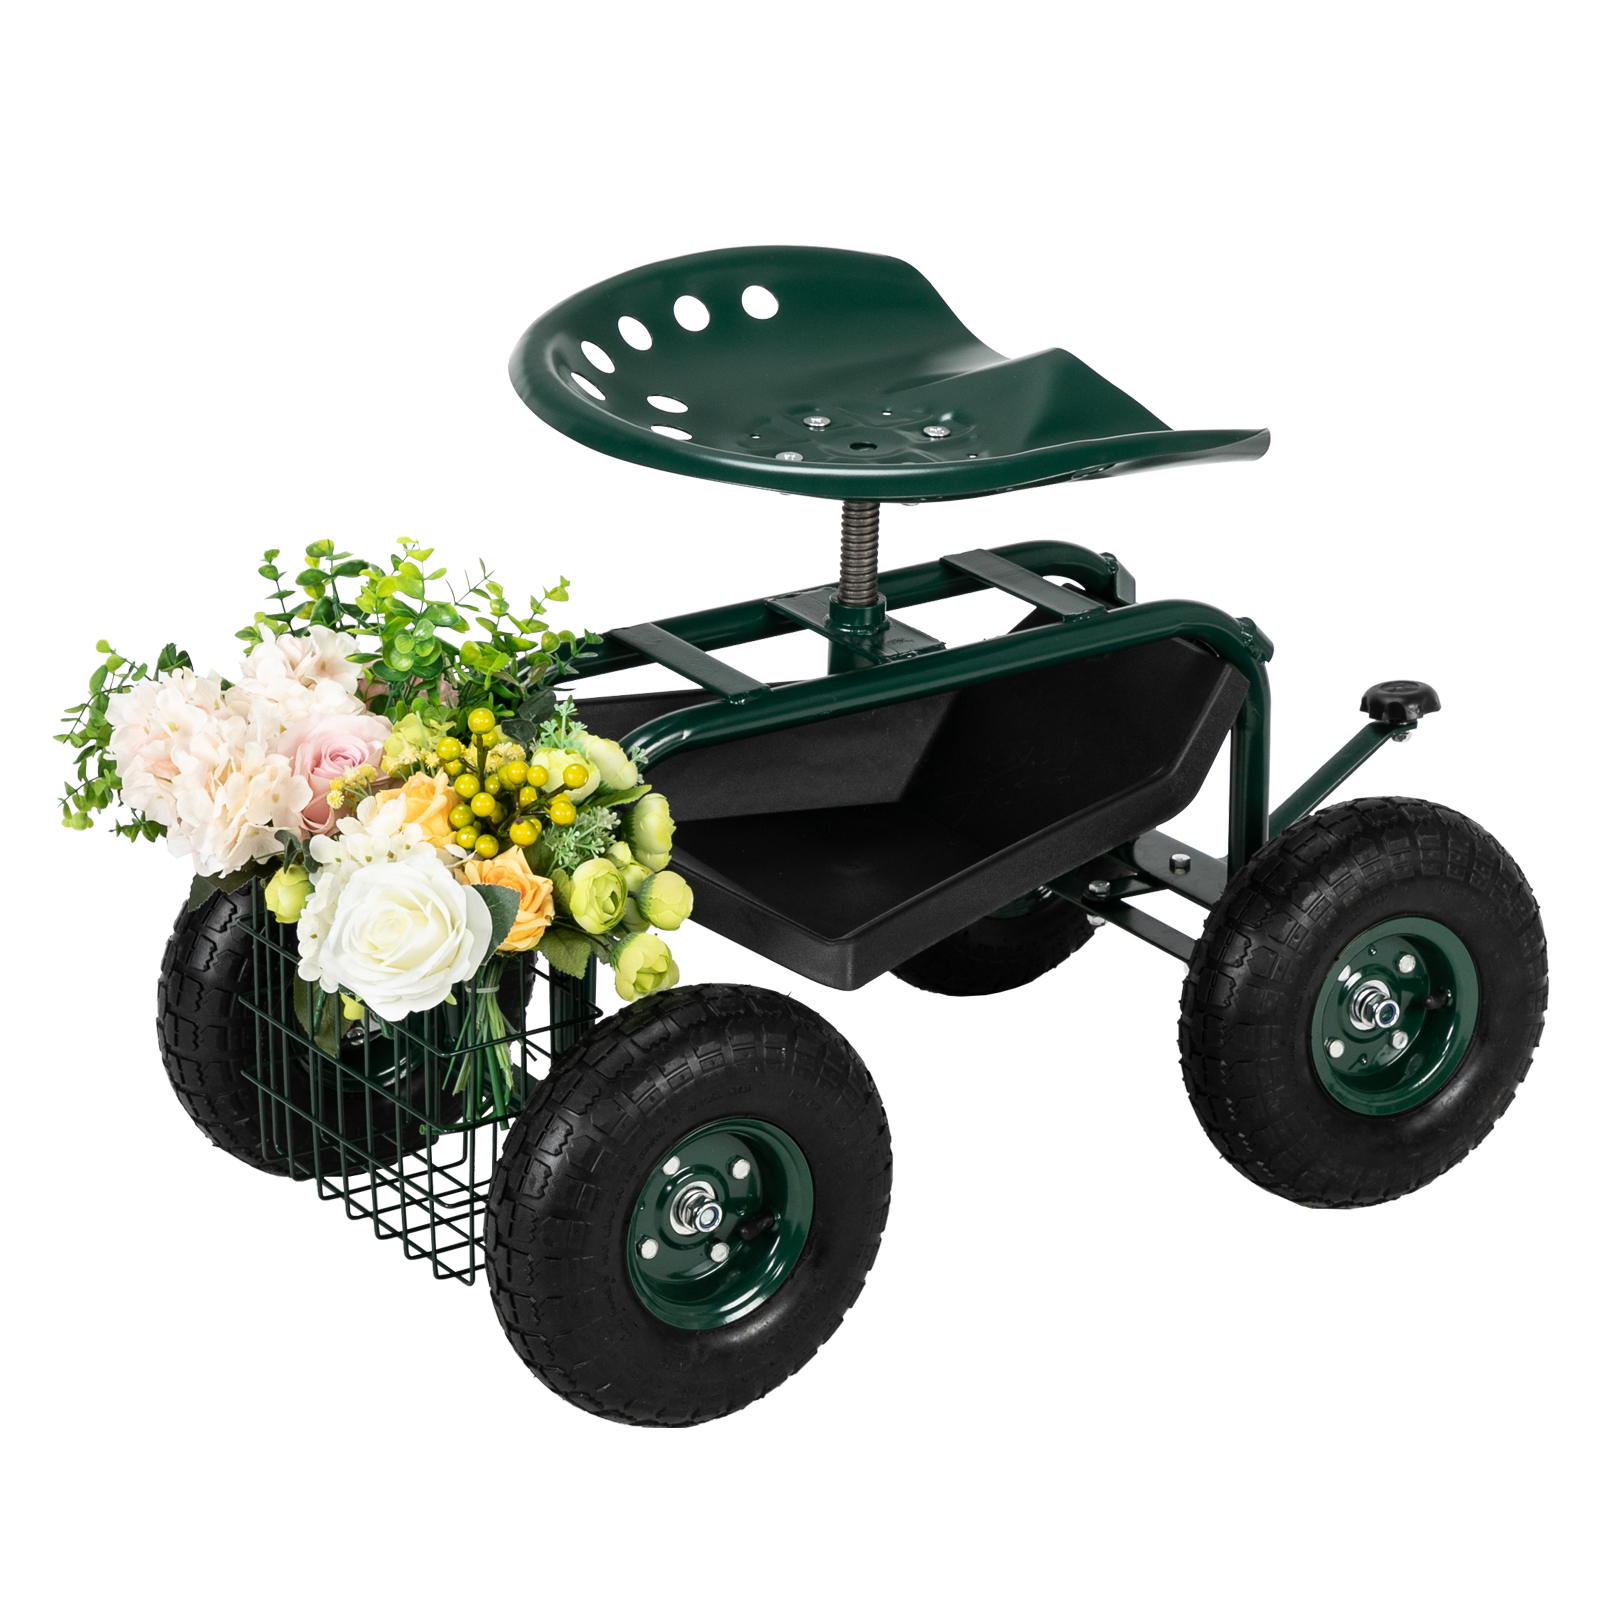 Winado Garden Stool Cart Rolling Work Seat Outdoor Storage Basket Scooter for Adjustable 360 Degree Swivel Seat Green